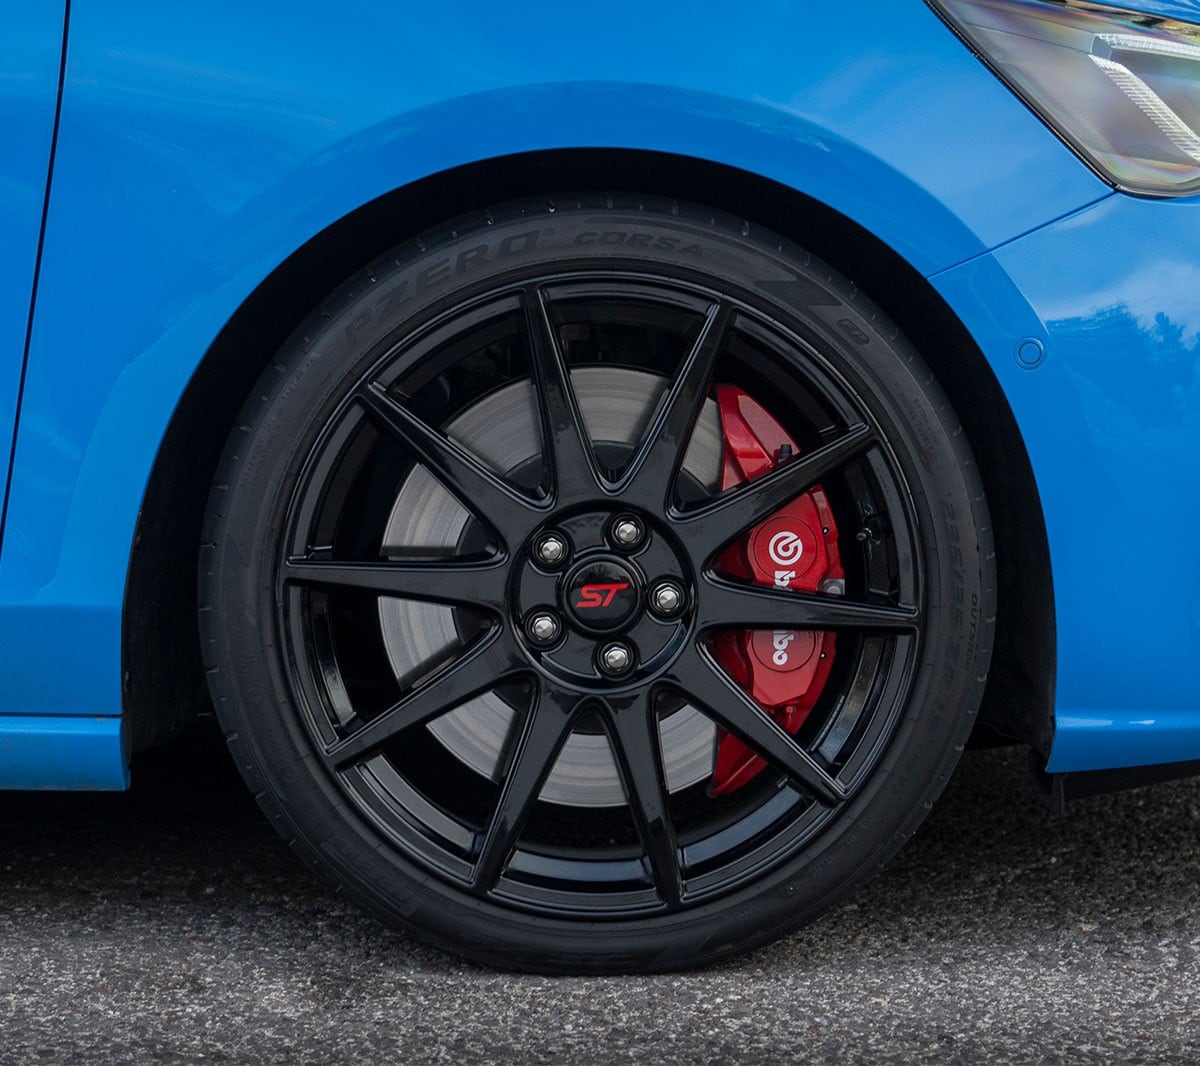 Oversized Brembo brakes with Pirelli P-Zero Corsa tyres